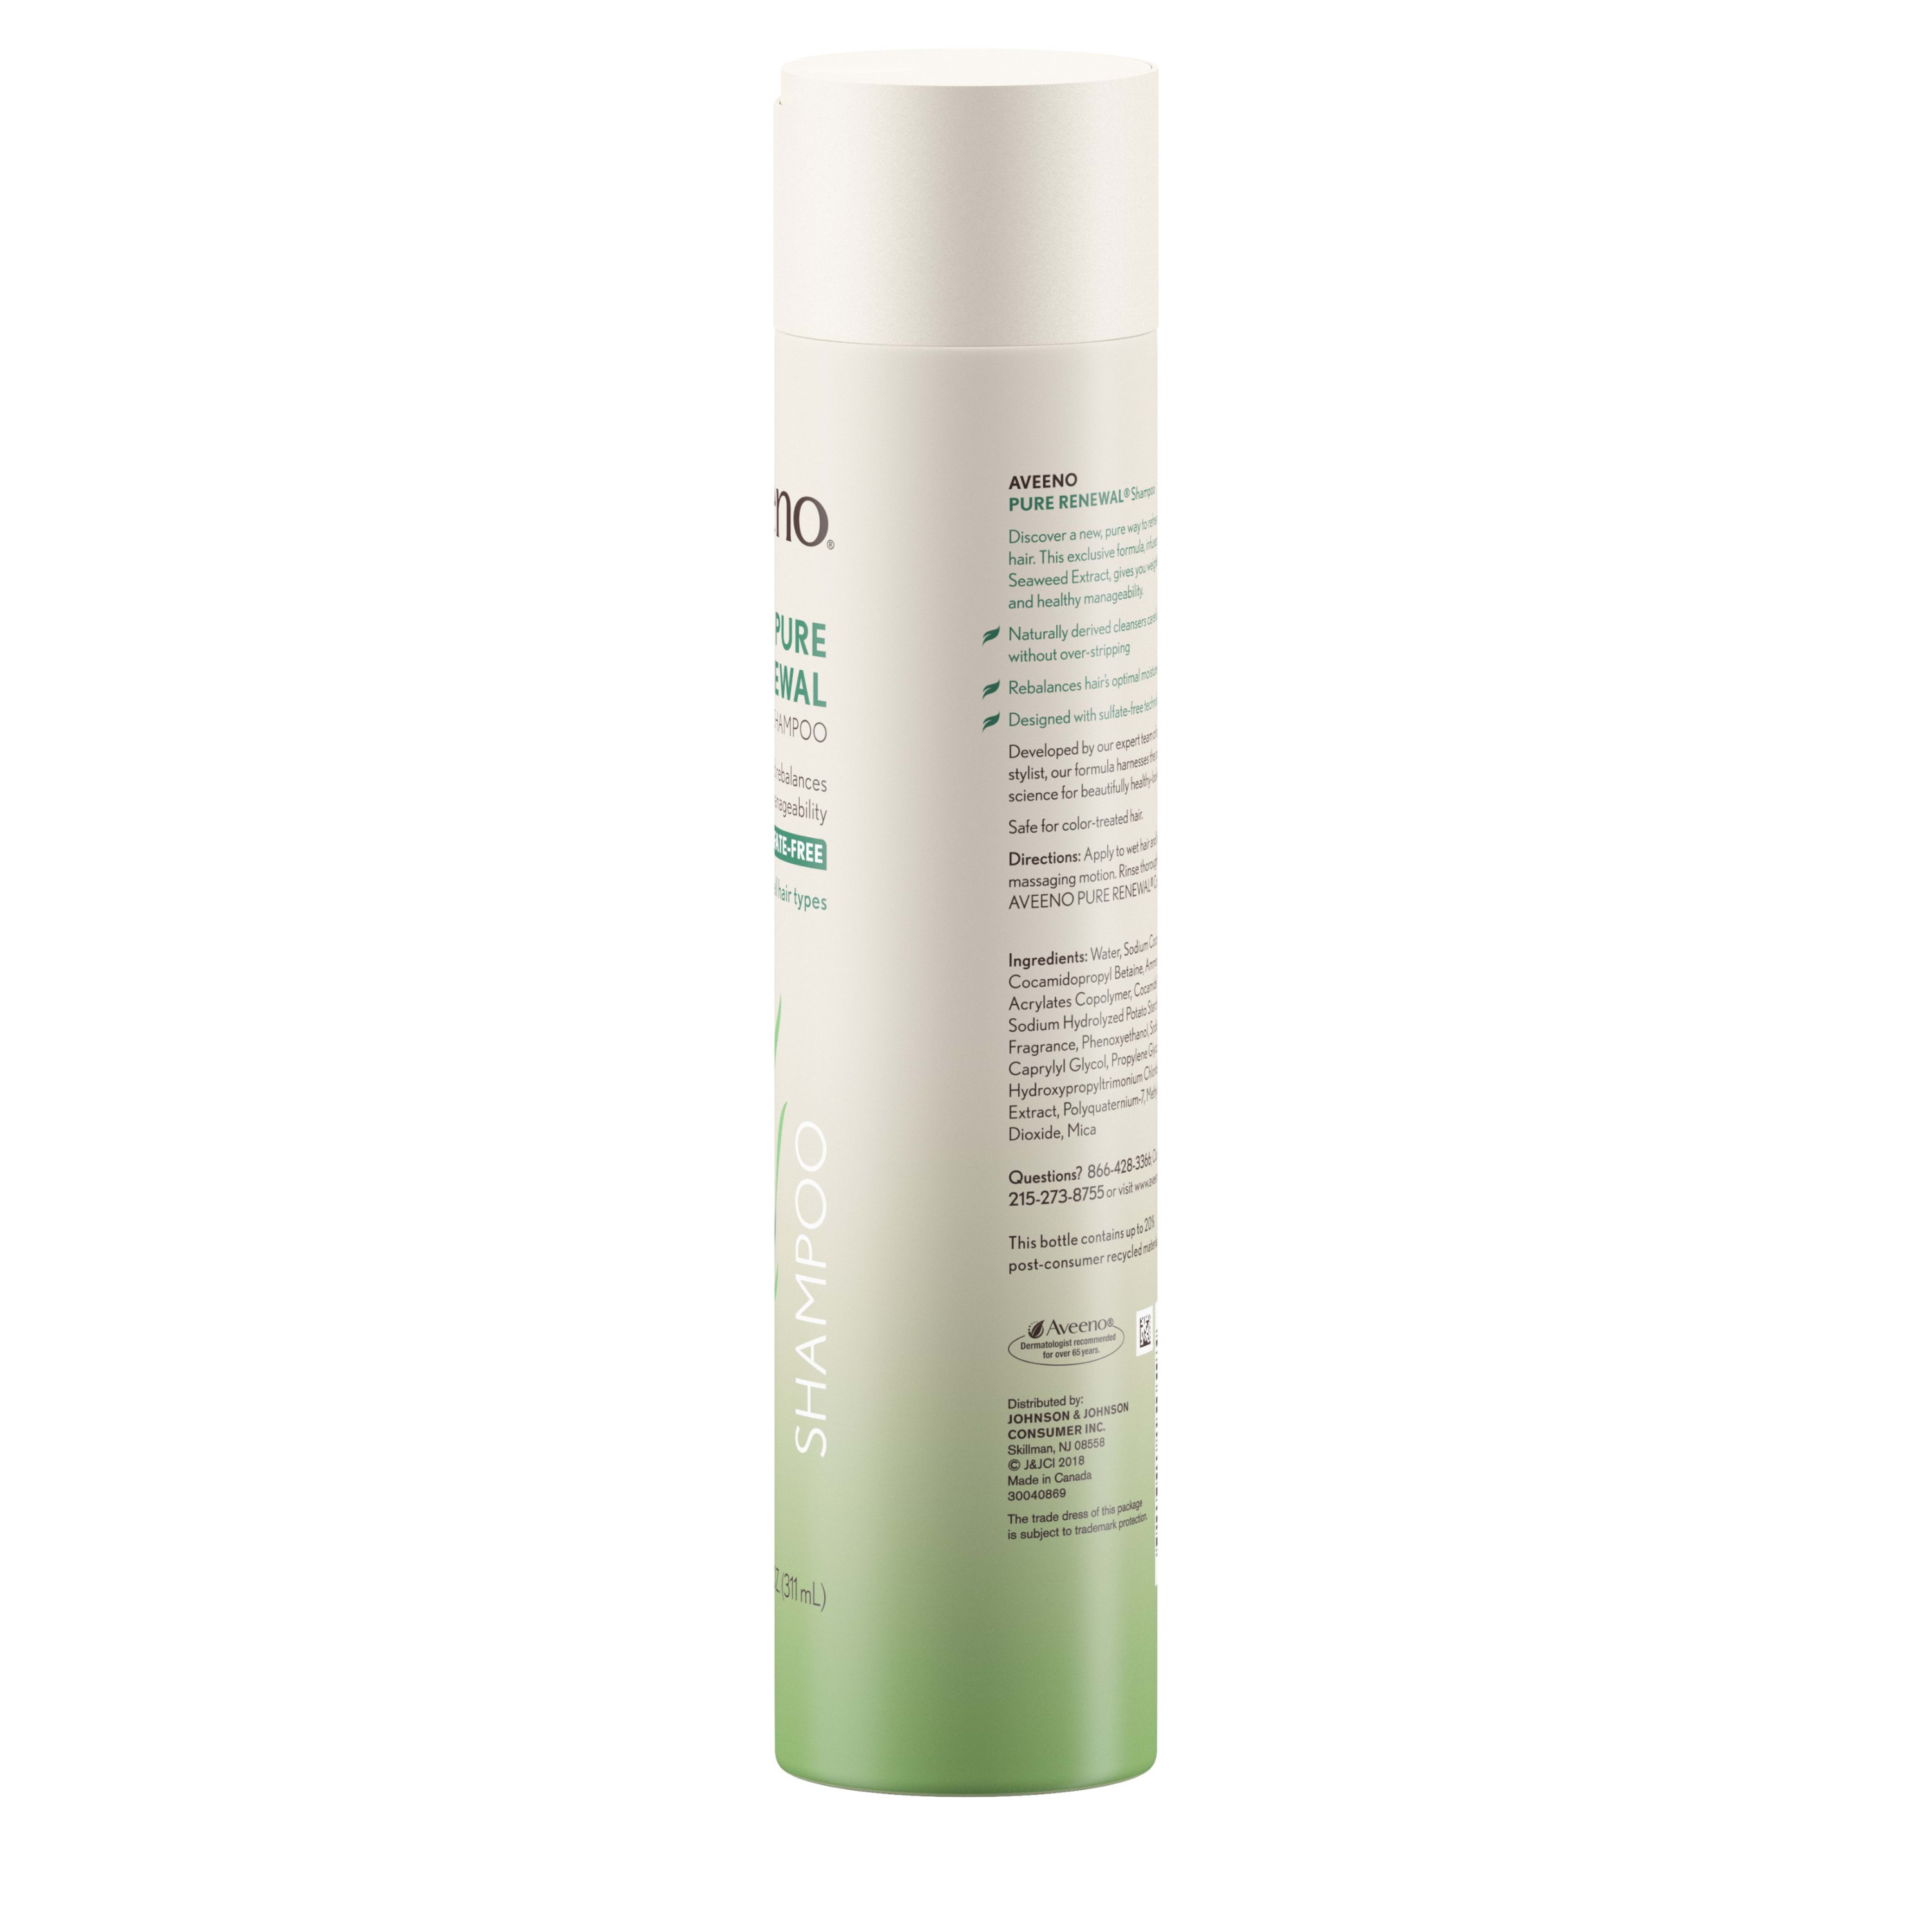 Aveeno Active Naturals Pure Renewal Moisturizing Daily Shampoo with Seaweed Extract, 10.5 fl oz - image 5 of 9